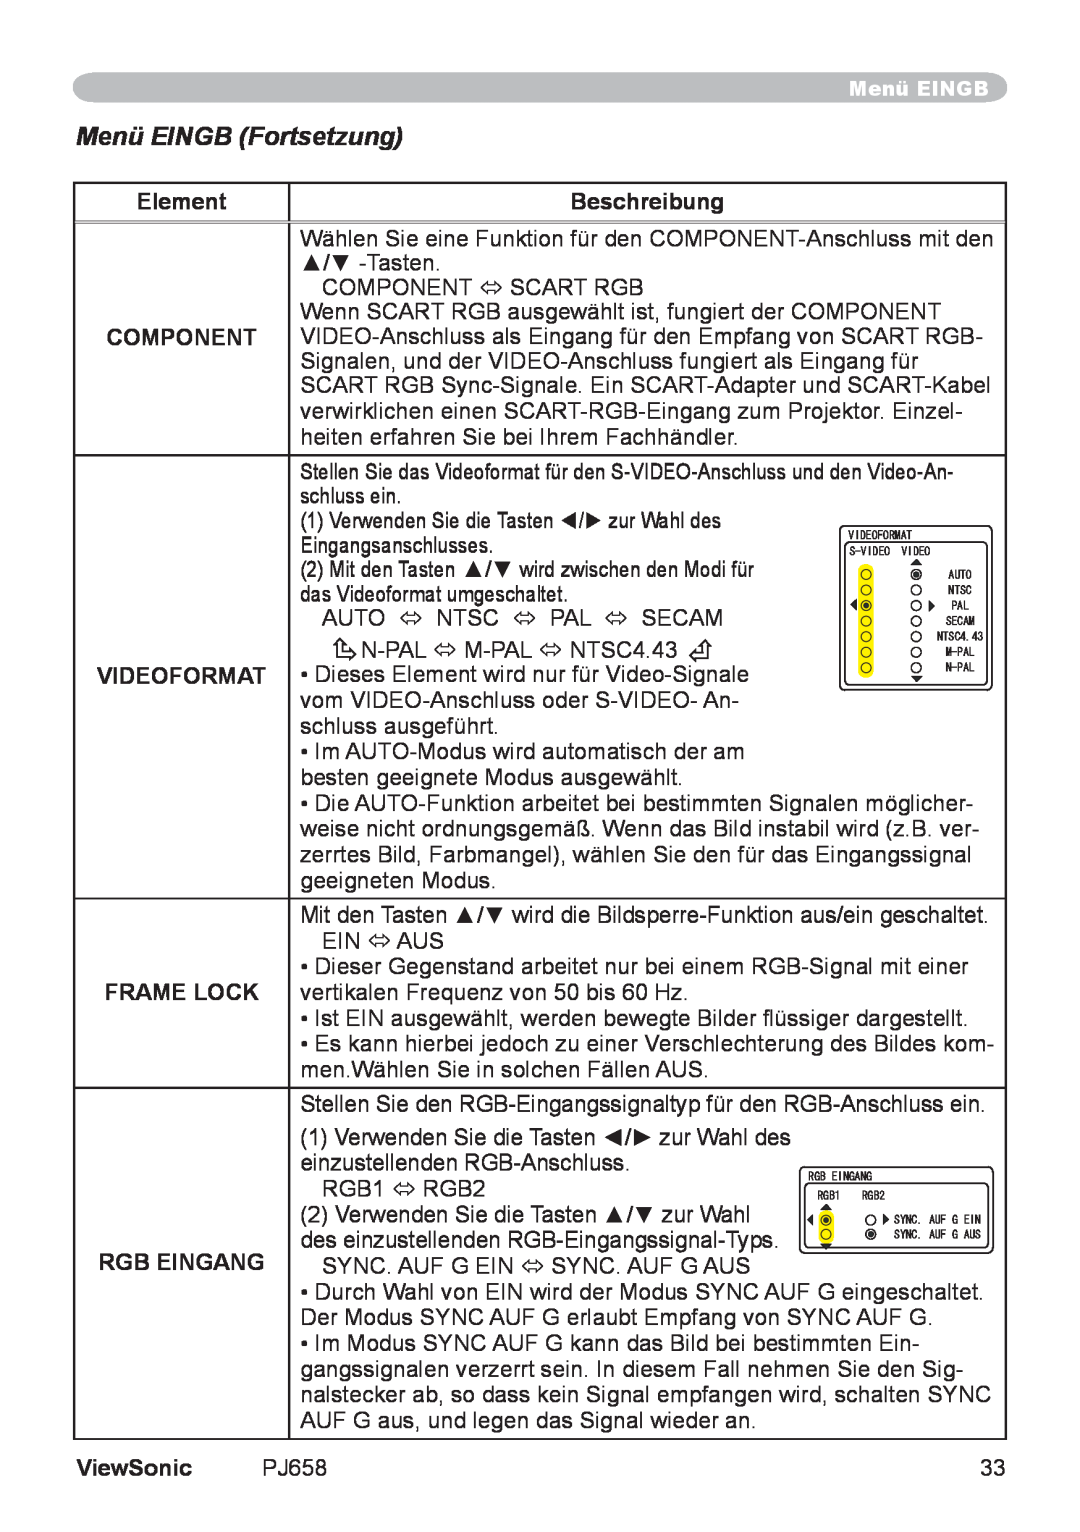 ViewSonic VS11361 manual Menü EINGB Fortsetzung, Element, Beschreibung, Component, Videoformat, Rgb Eingang, ViewSonic 